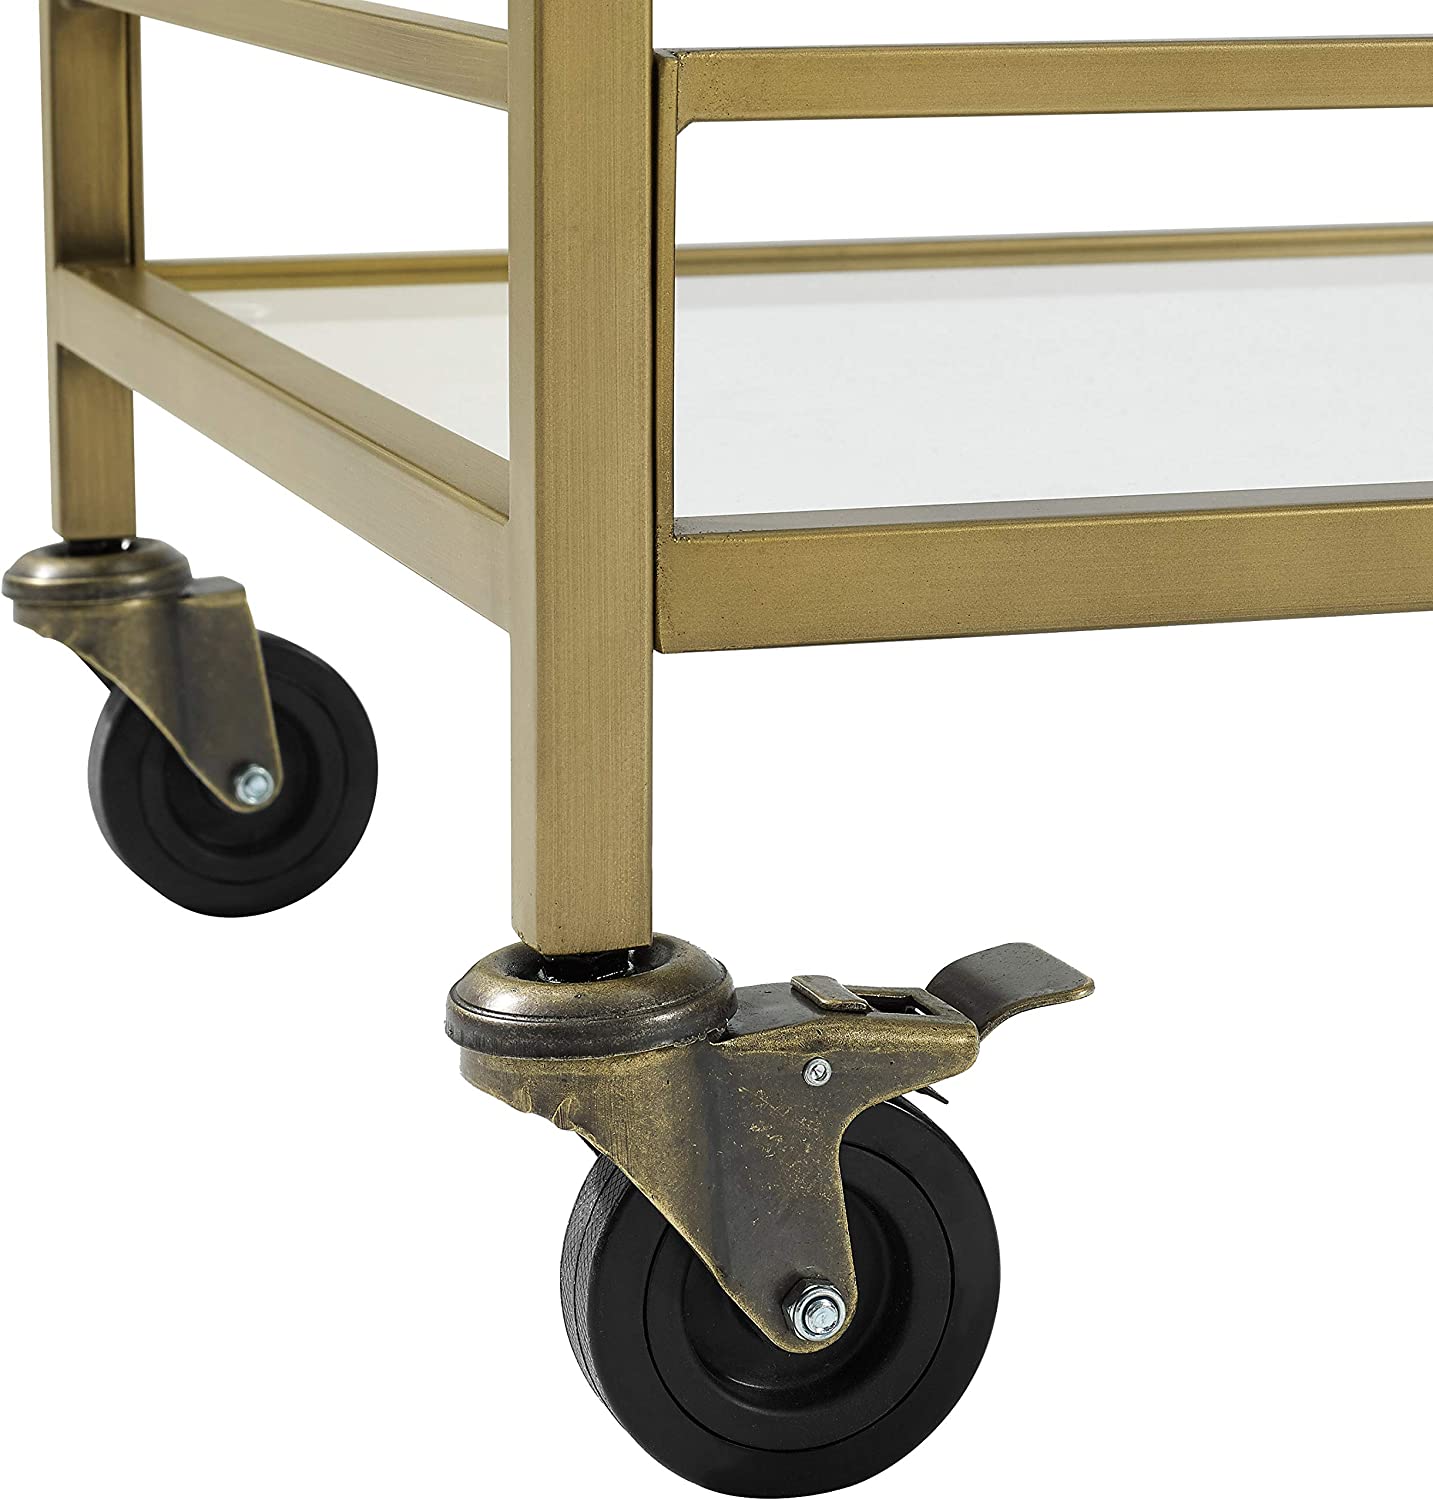 Crosley Furniture Aimee Rolling Bar Cart, Gold and Glass, Model:CF4007-GL